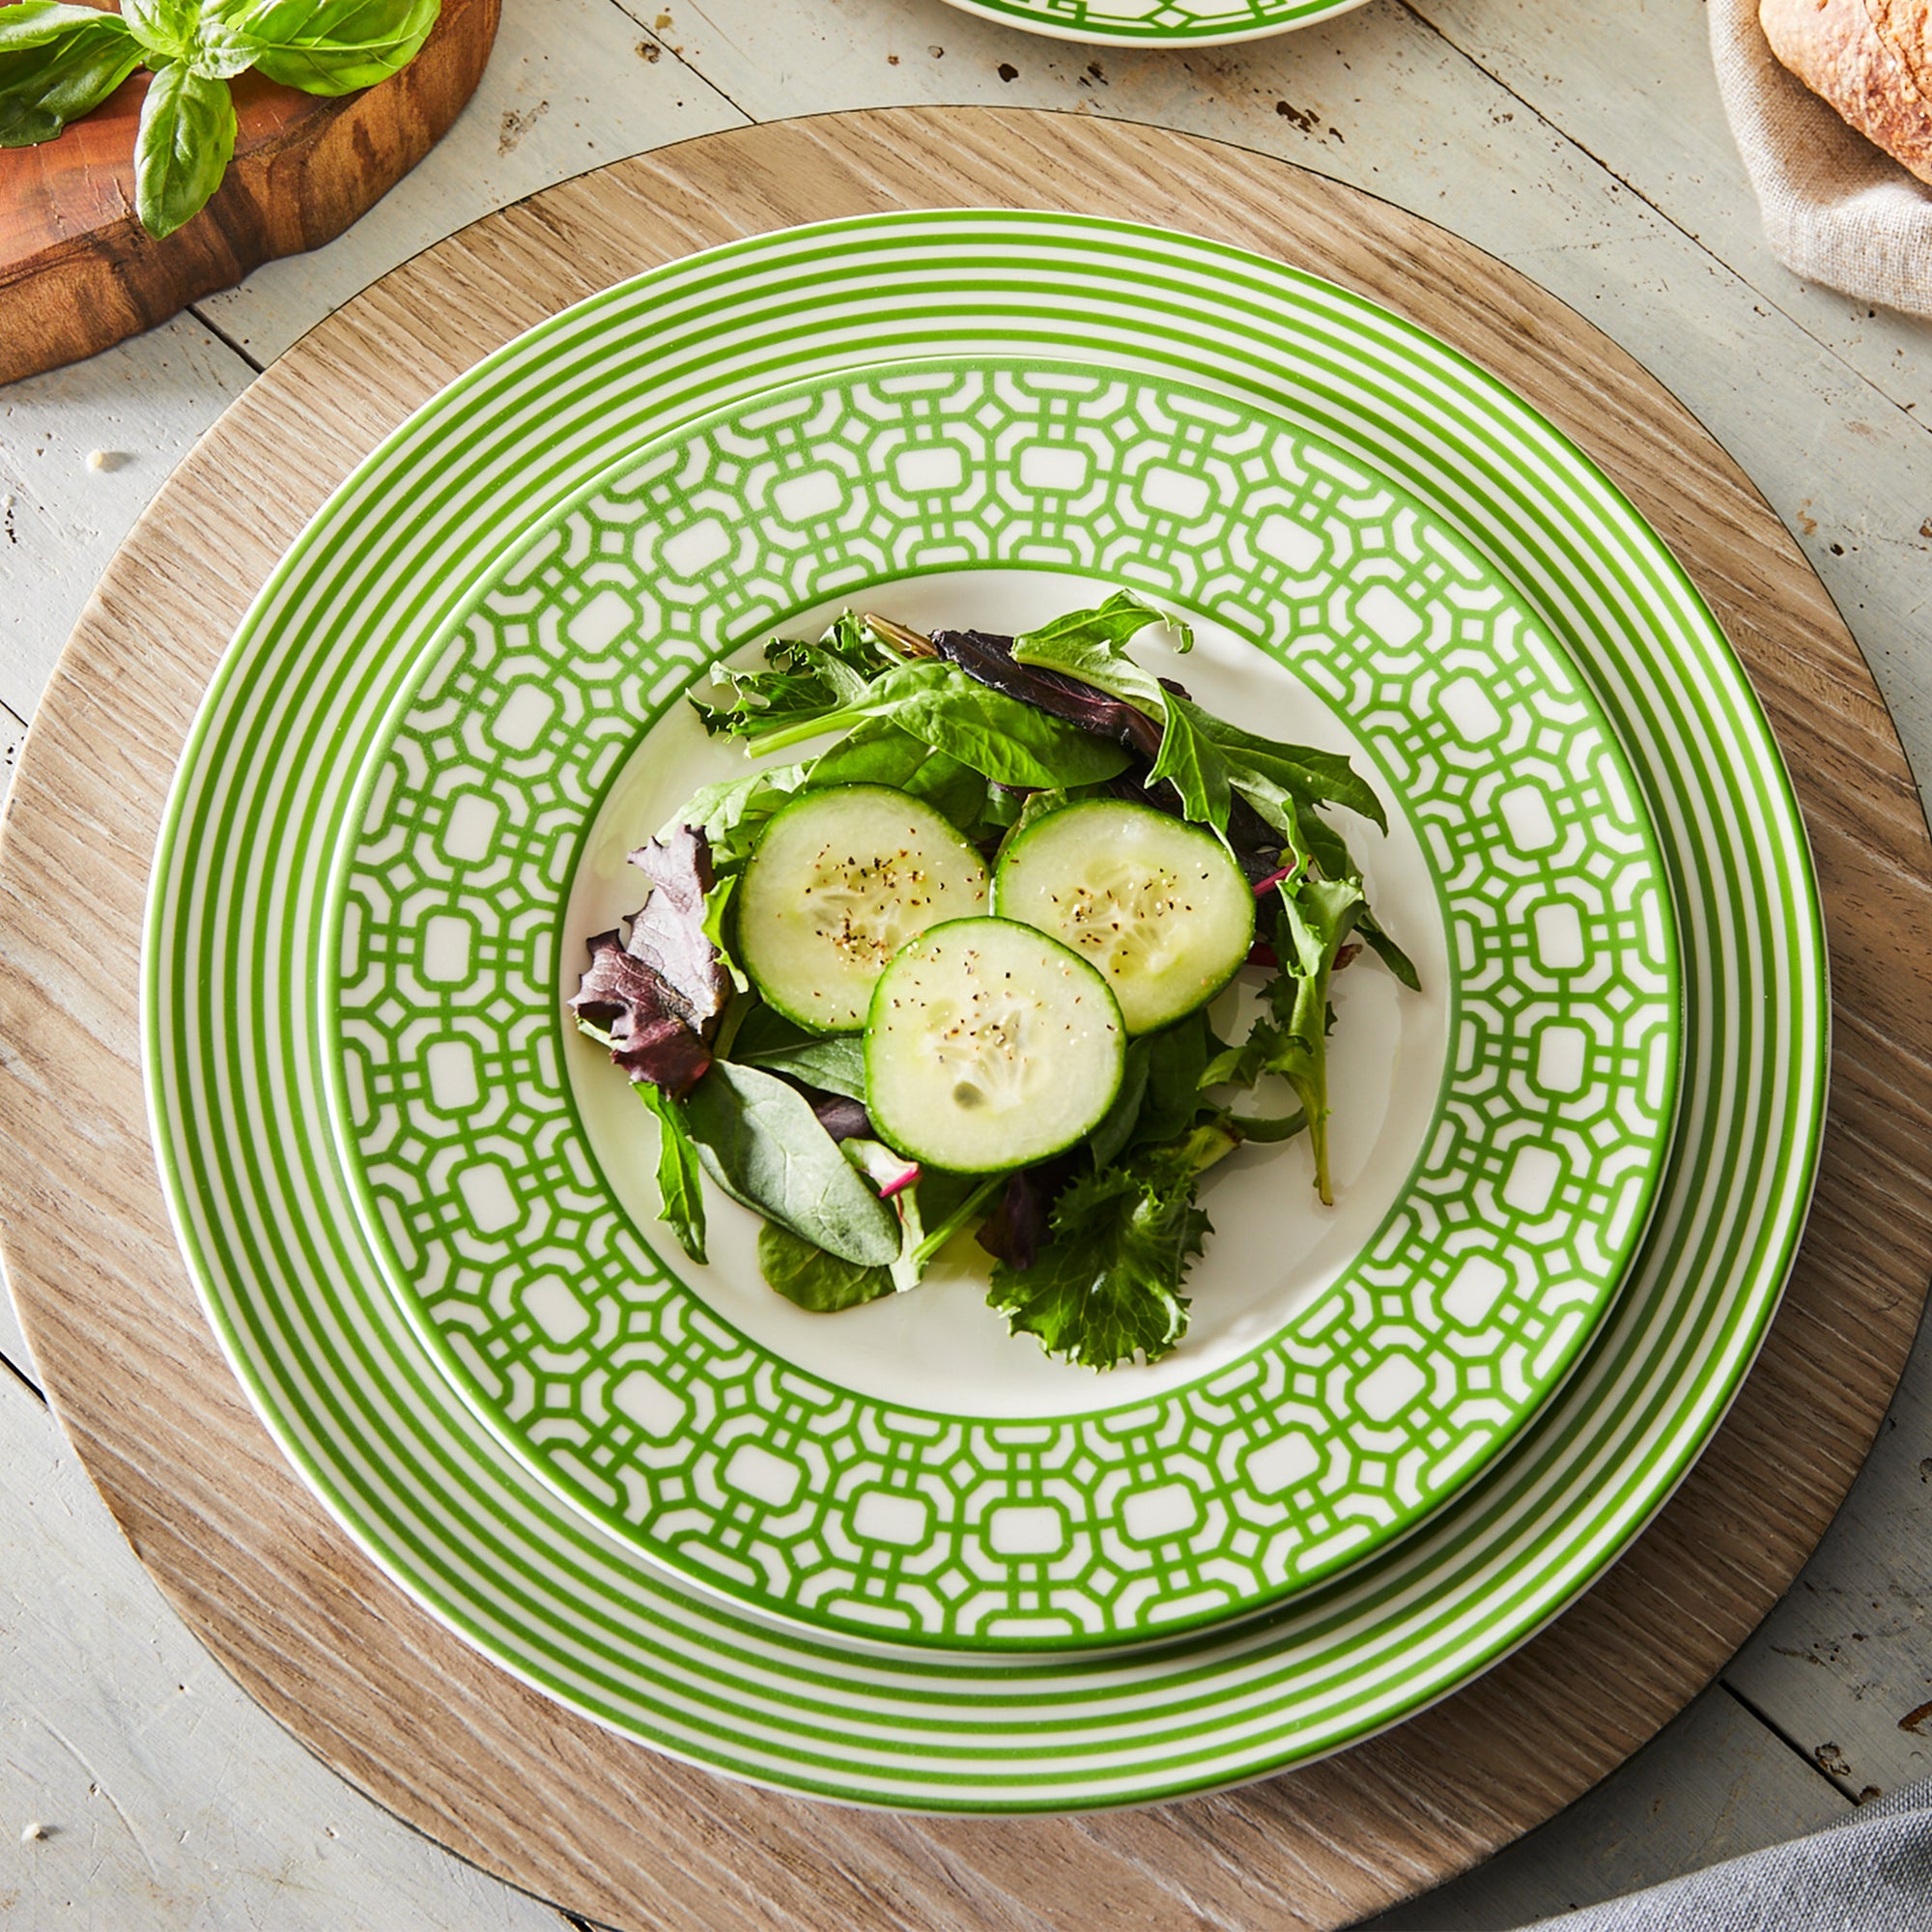 A Newport Garden Gate Verde Rimmed Salad Plate by Caskata Artisanal Home, featuring a detailed green patterned border, embodies contemporary tableware design reminiscent of Newport Garden Gate.